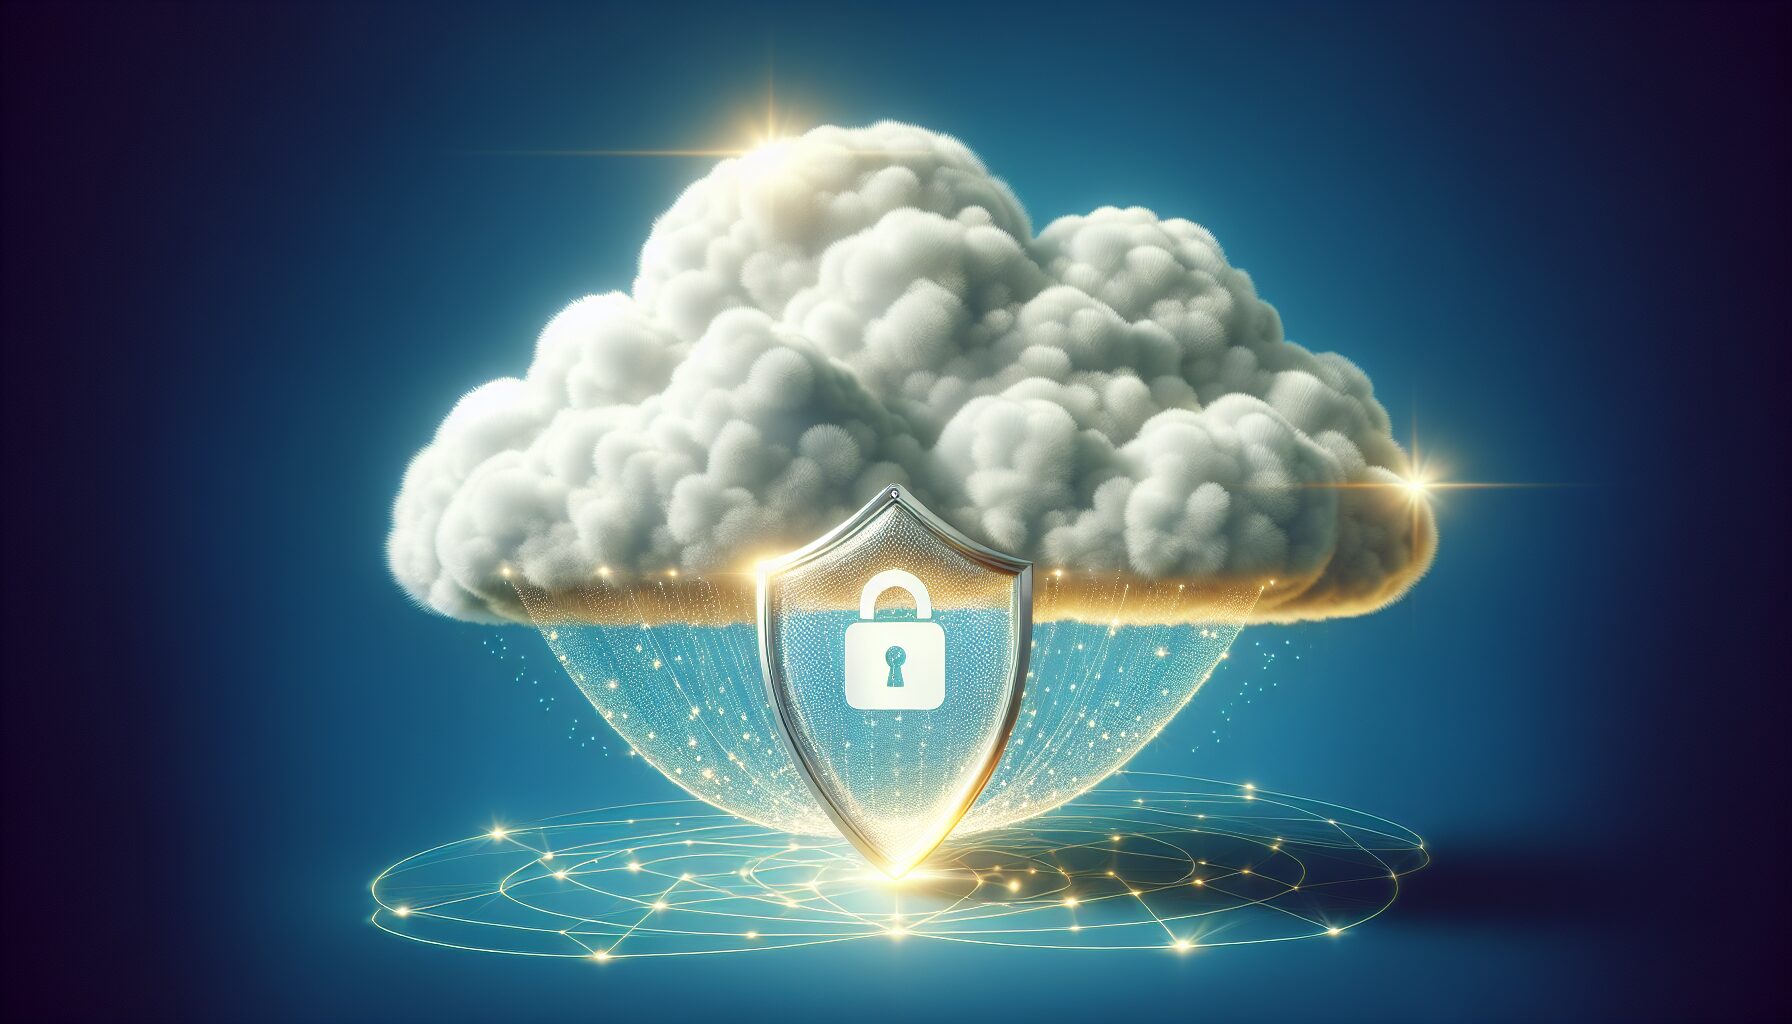 Cloud storage security